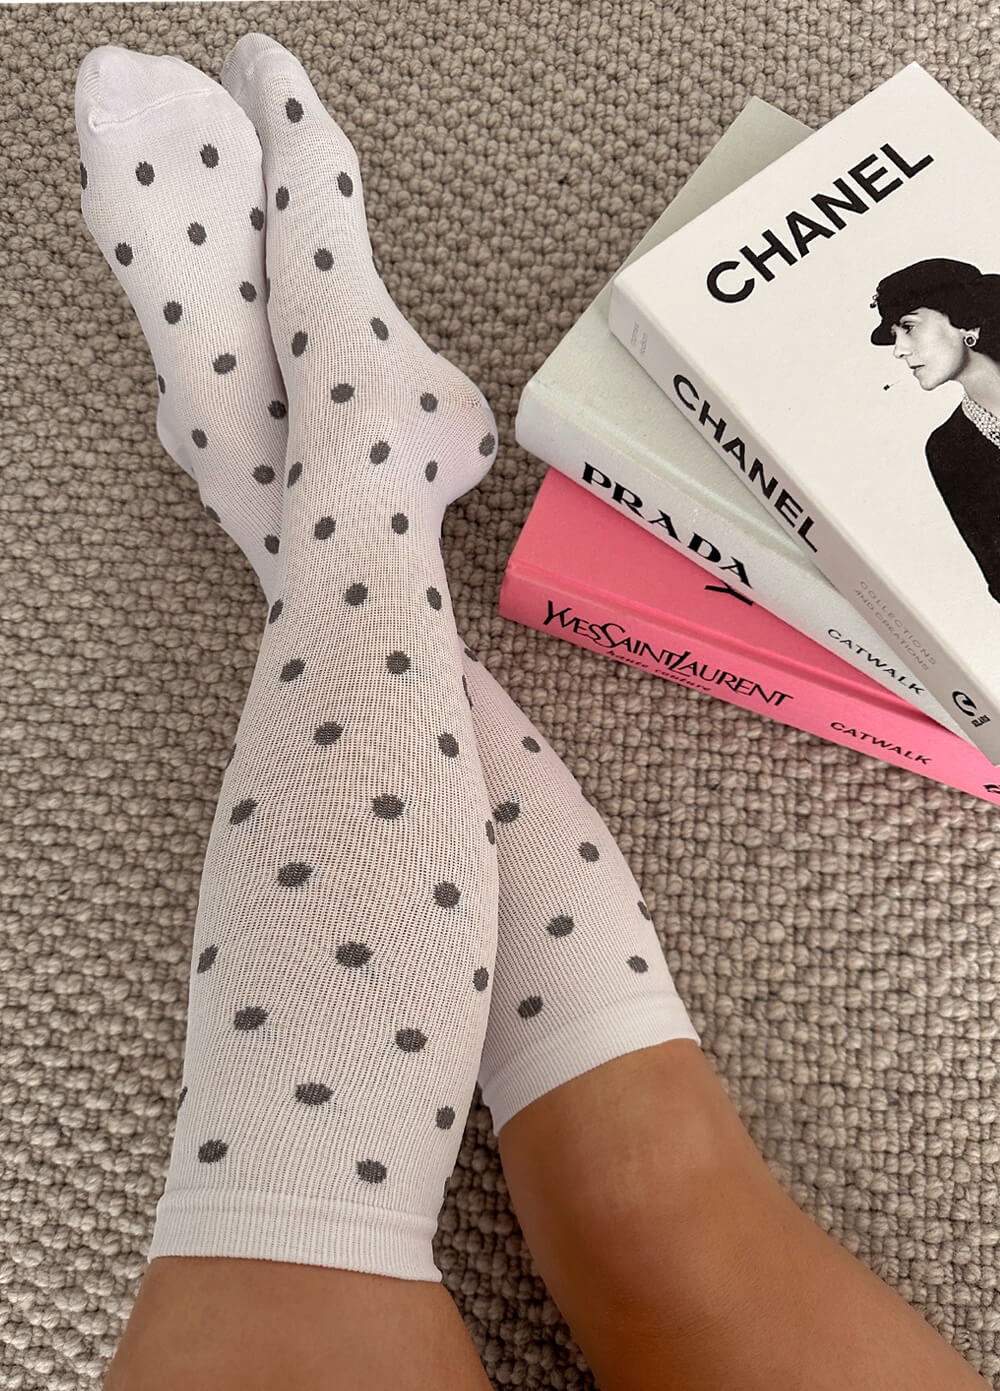 Mama Sox - Excite Maternity Compression Socks in White Polkadot